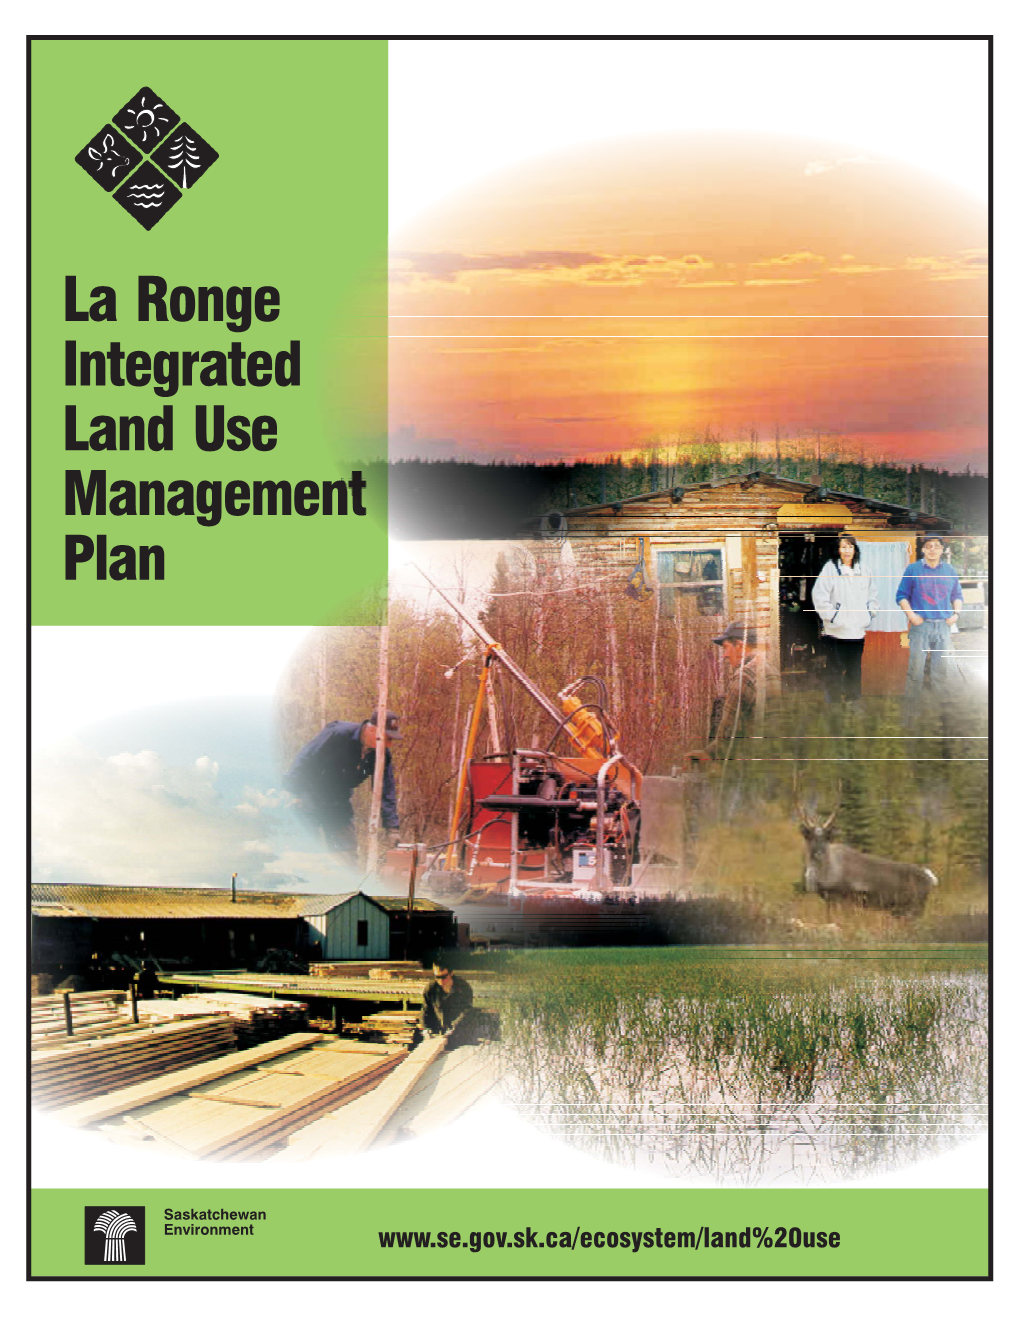 La Ronge Integrated Land Use Management Plan